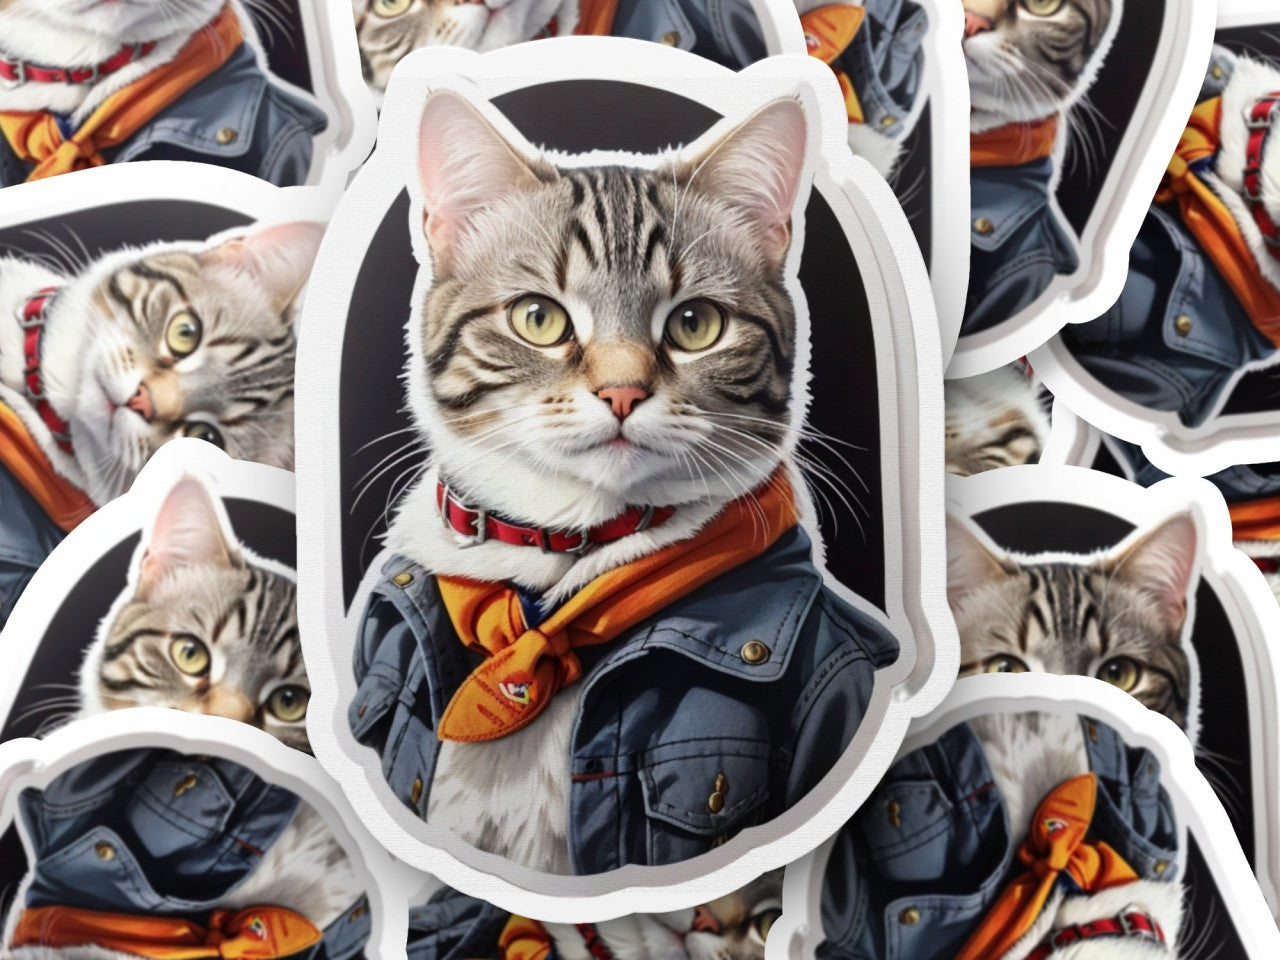 Set 2 bucati, Sticker decorativ, Pisica American wirehair cu jacheta, Rezistent la apa, NO4900, 16 cm, Multicolor